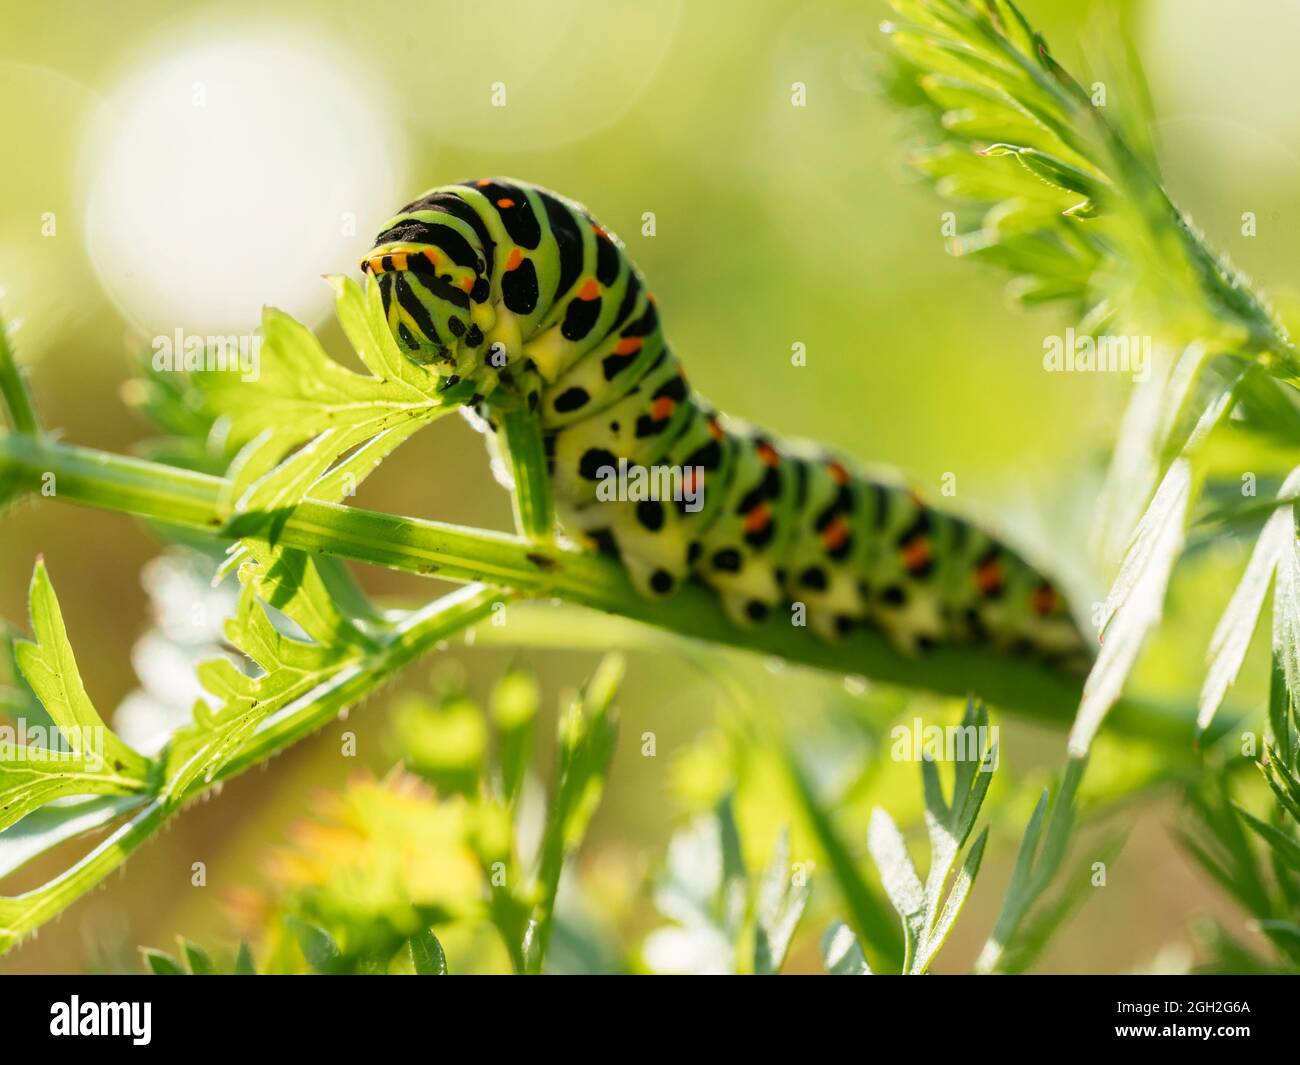 Swallowtail caterpillar feeding on carrot greens. Stock Photo